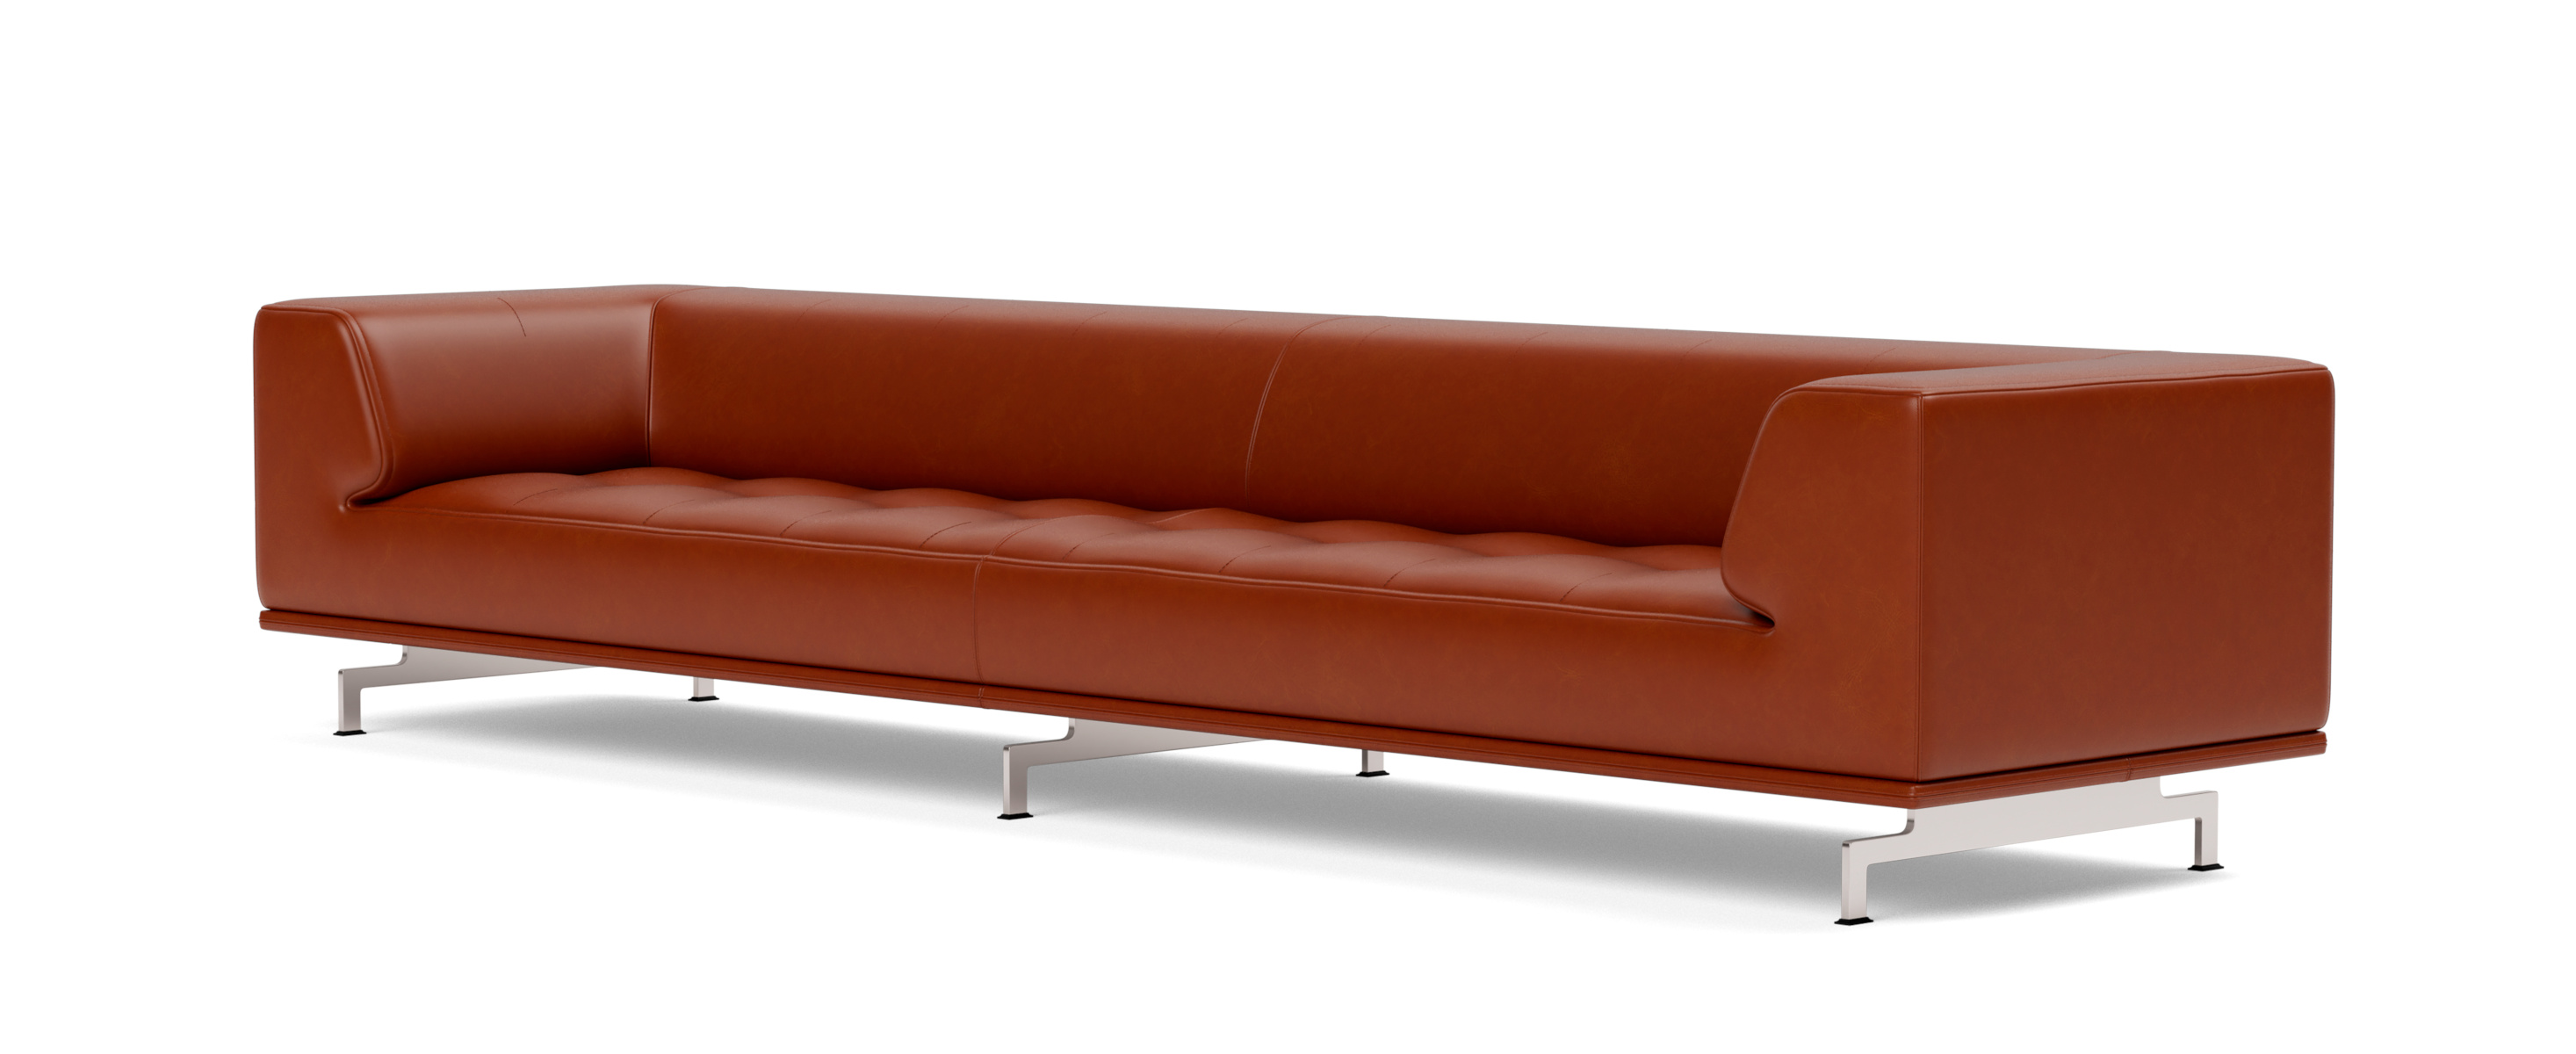 Delphi Sofa - Model 4512, brushed aluminium / leder cera 905 russet brown